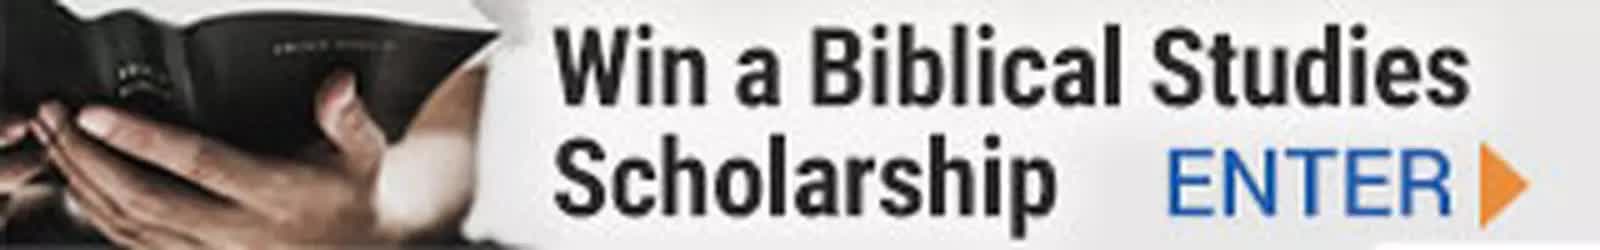 Win a scholarship in biblical studies from Crosswalk University